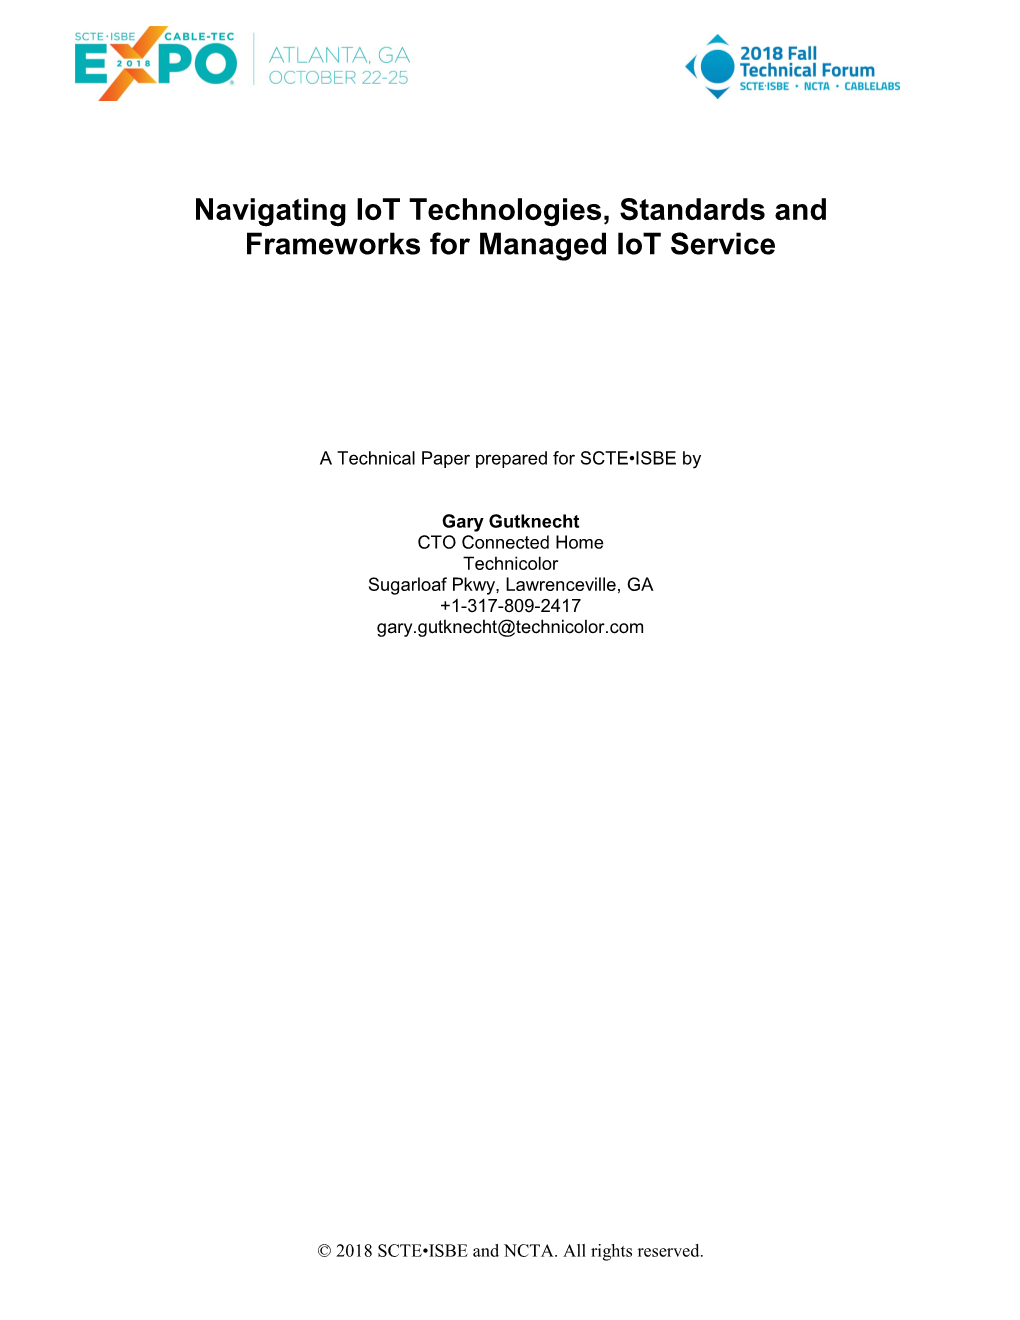 Navigating Iot Technologies, Standards and Frameworks for Managed Iot Service